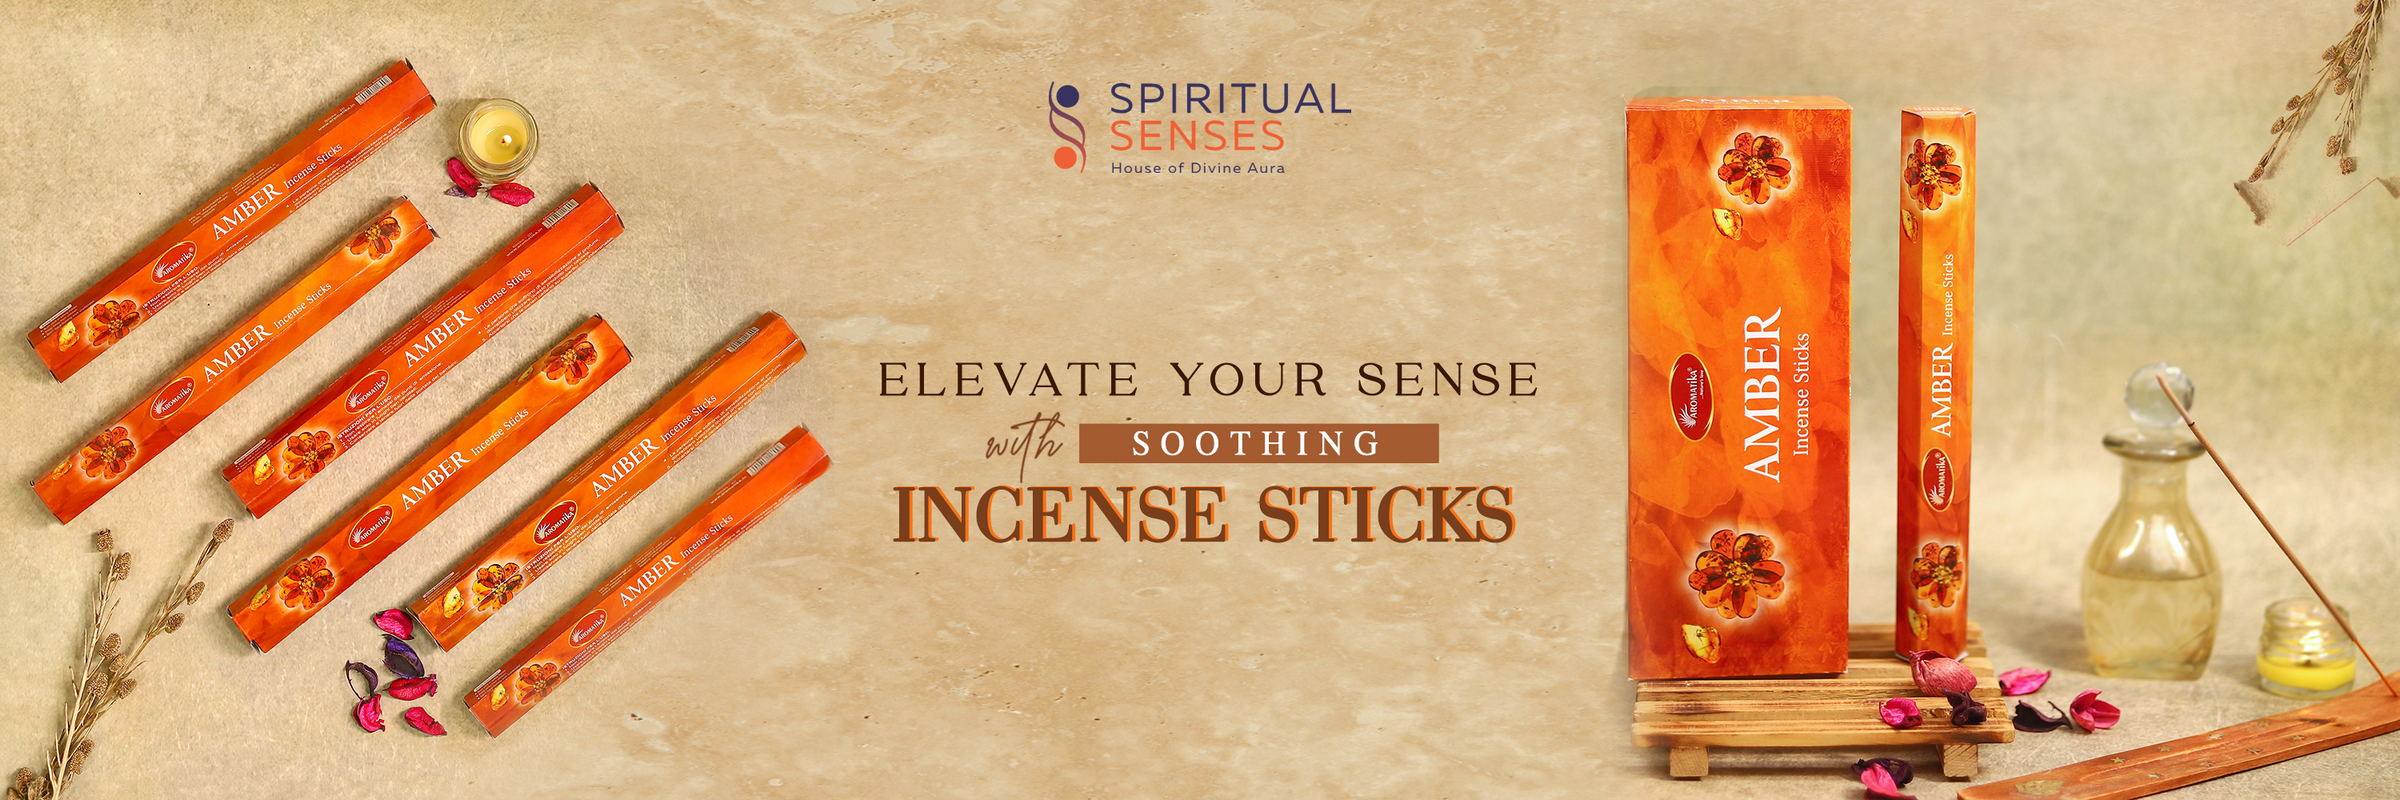 spiritual senses incense sticks